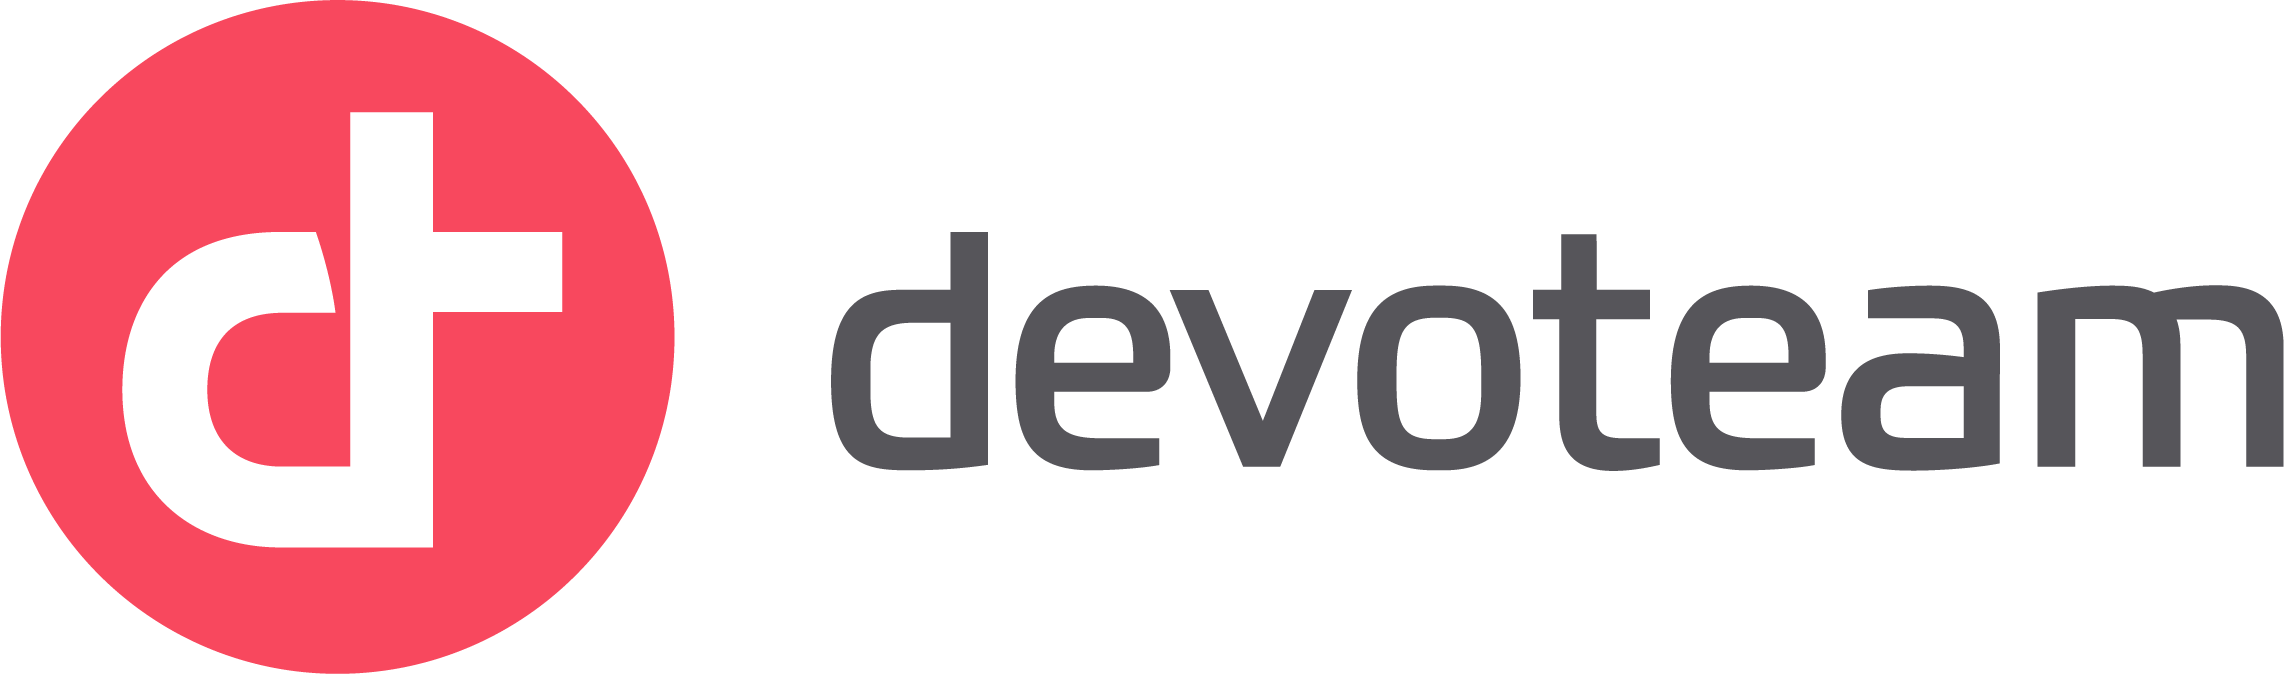 devoteam_logo